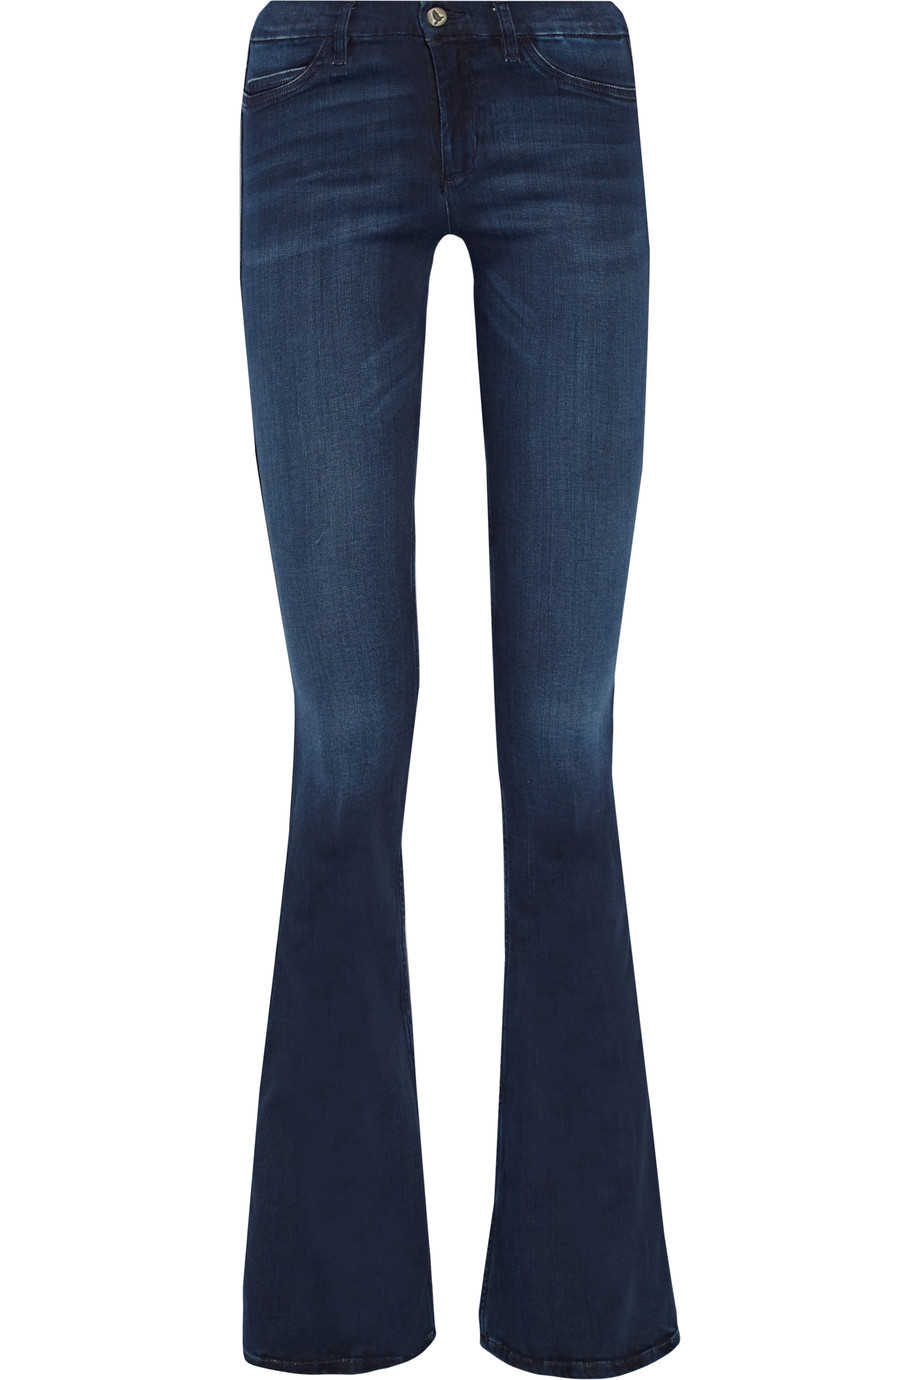 MIH-Jeans-Skinny-Marrakesh.jpg